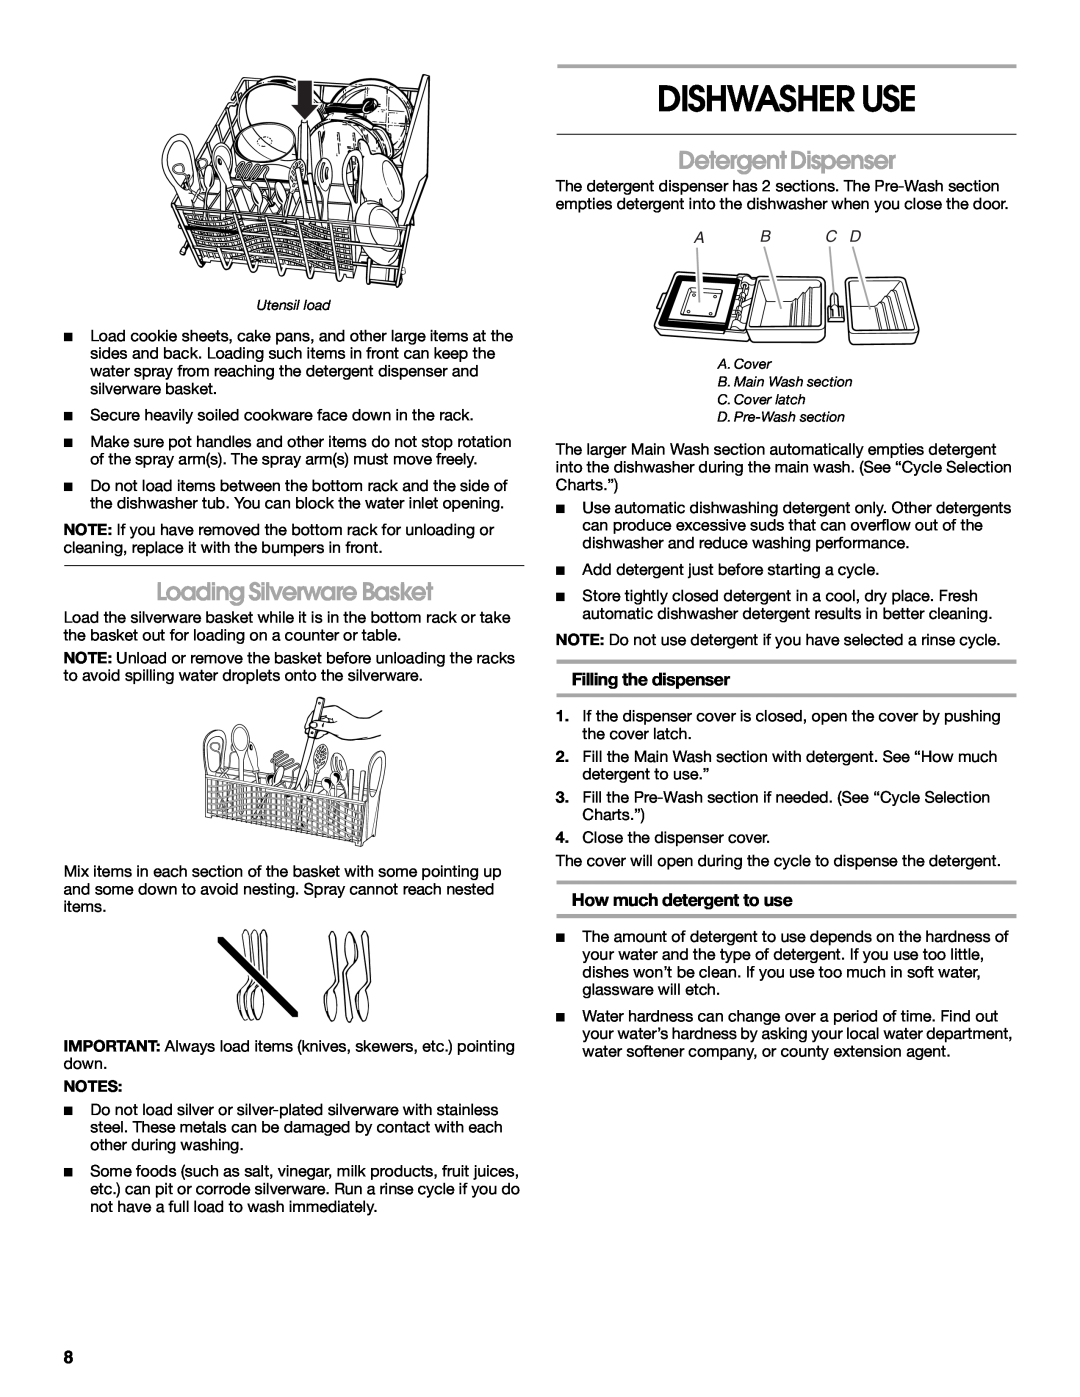 Whirlpool TUD670OP manual Dishwasher Use, Loading Silverware Basket, Detergent Dispenser, Filling the dispenser, A B C D 